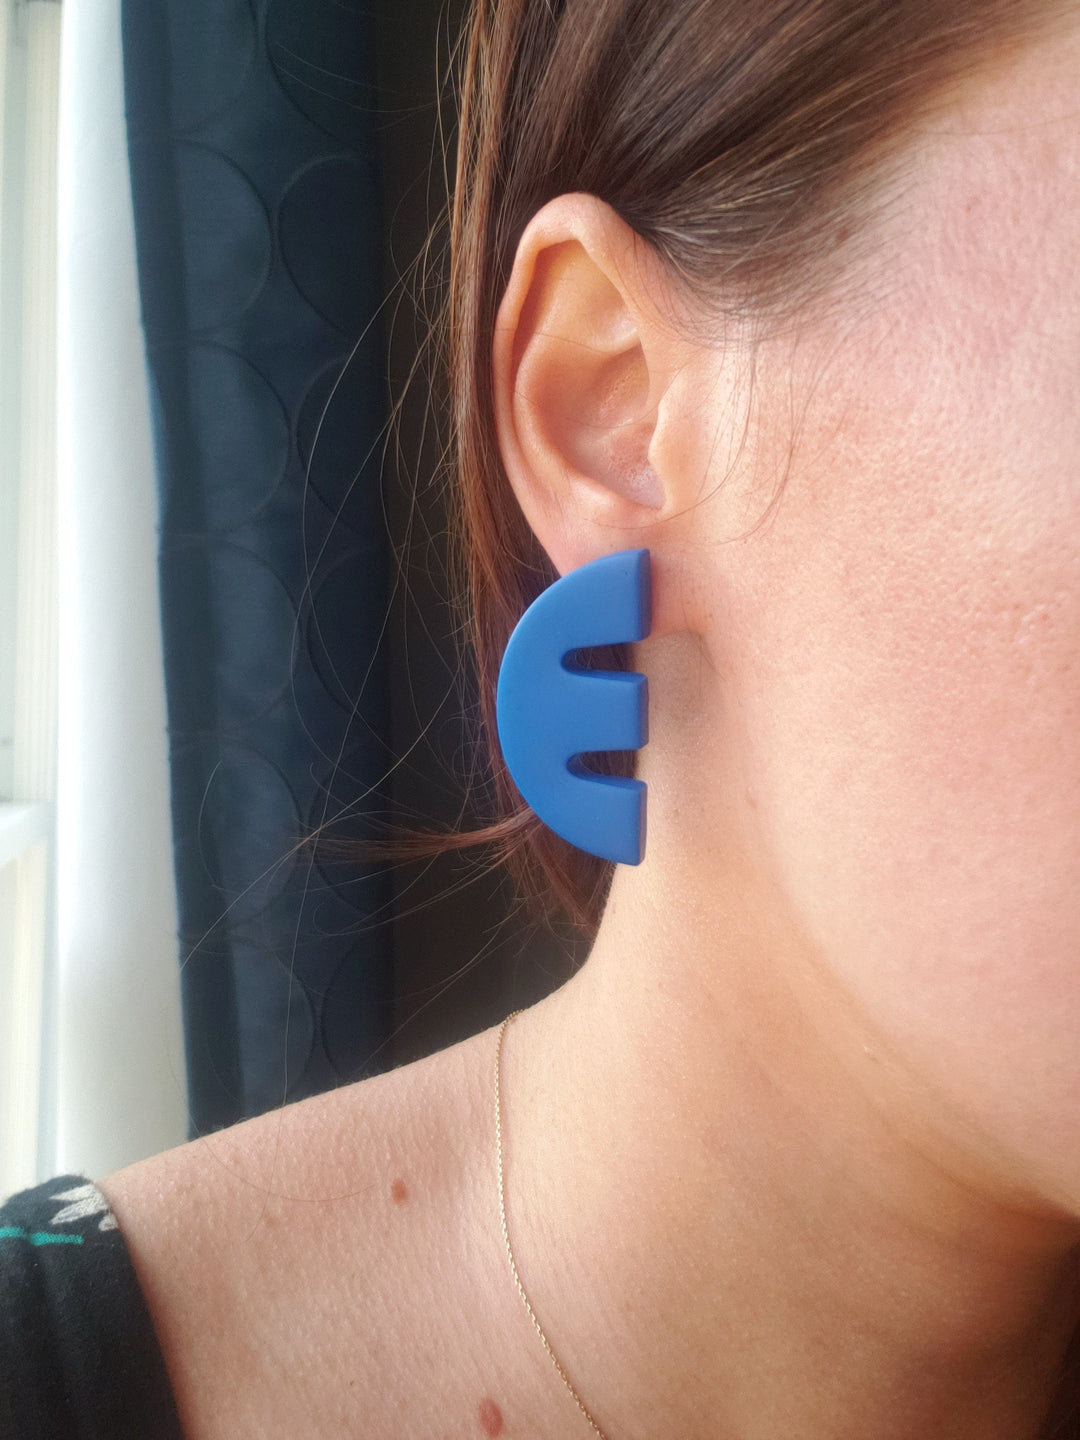 blue polymer clay earrings